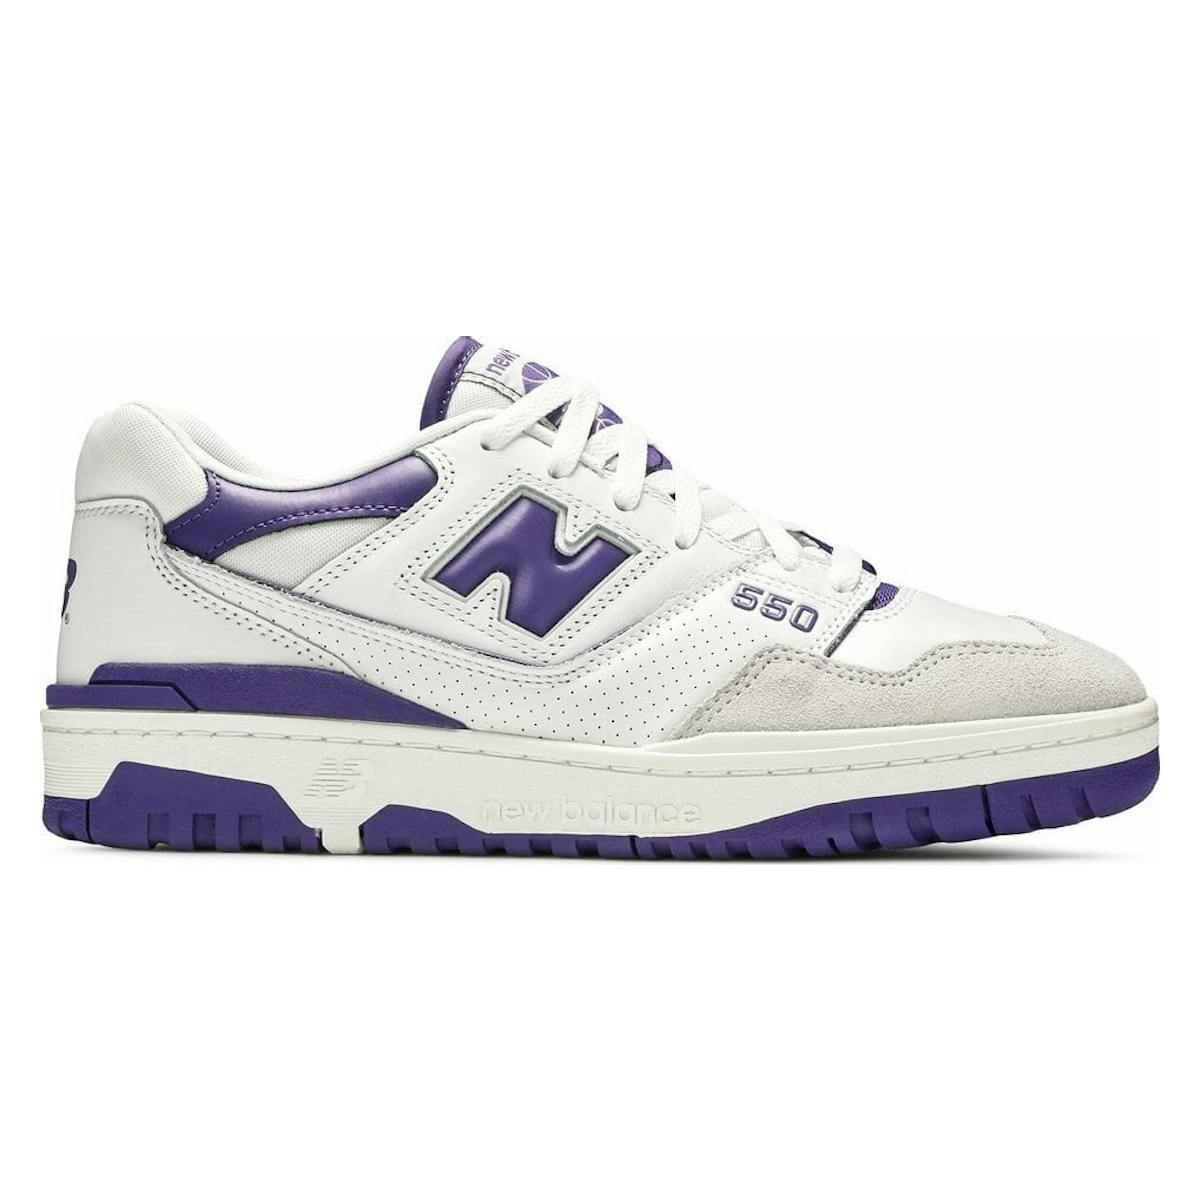 New Balance 550 "White Purple"